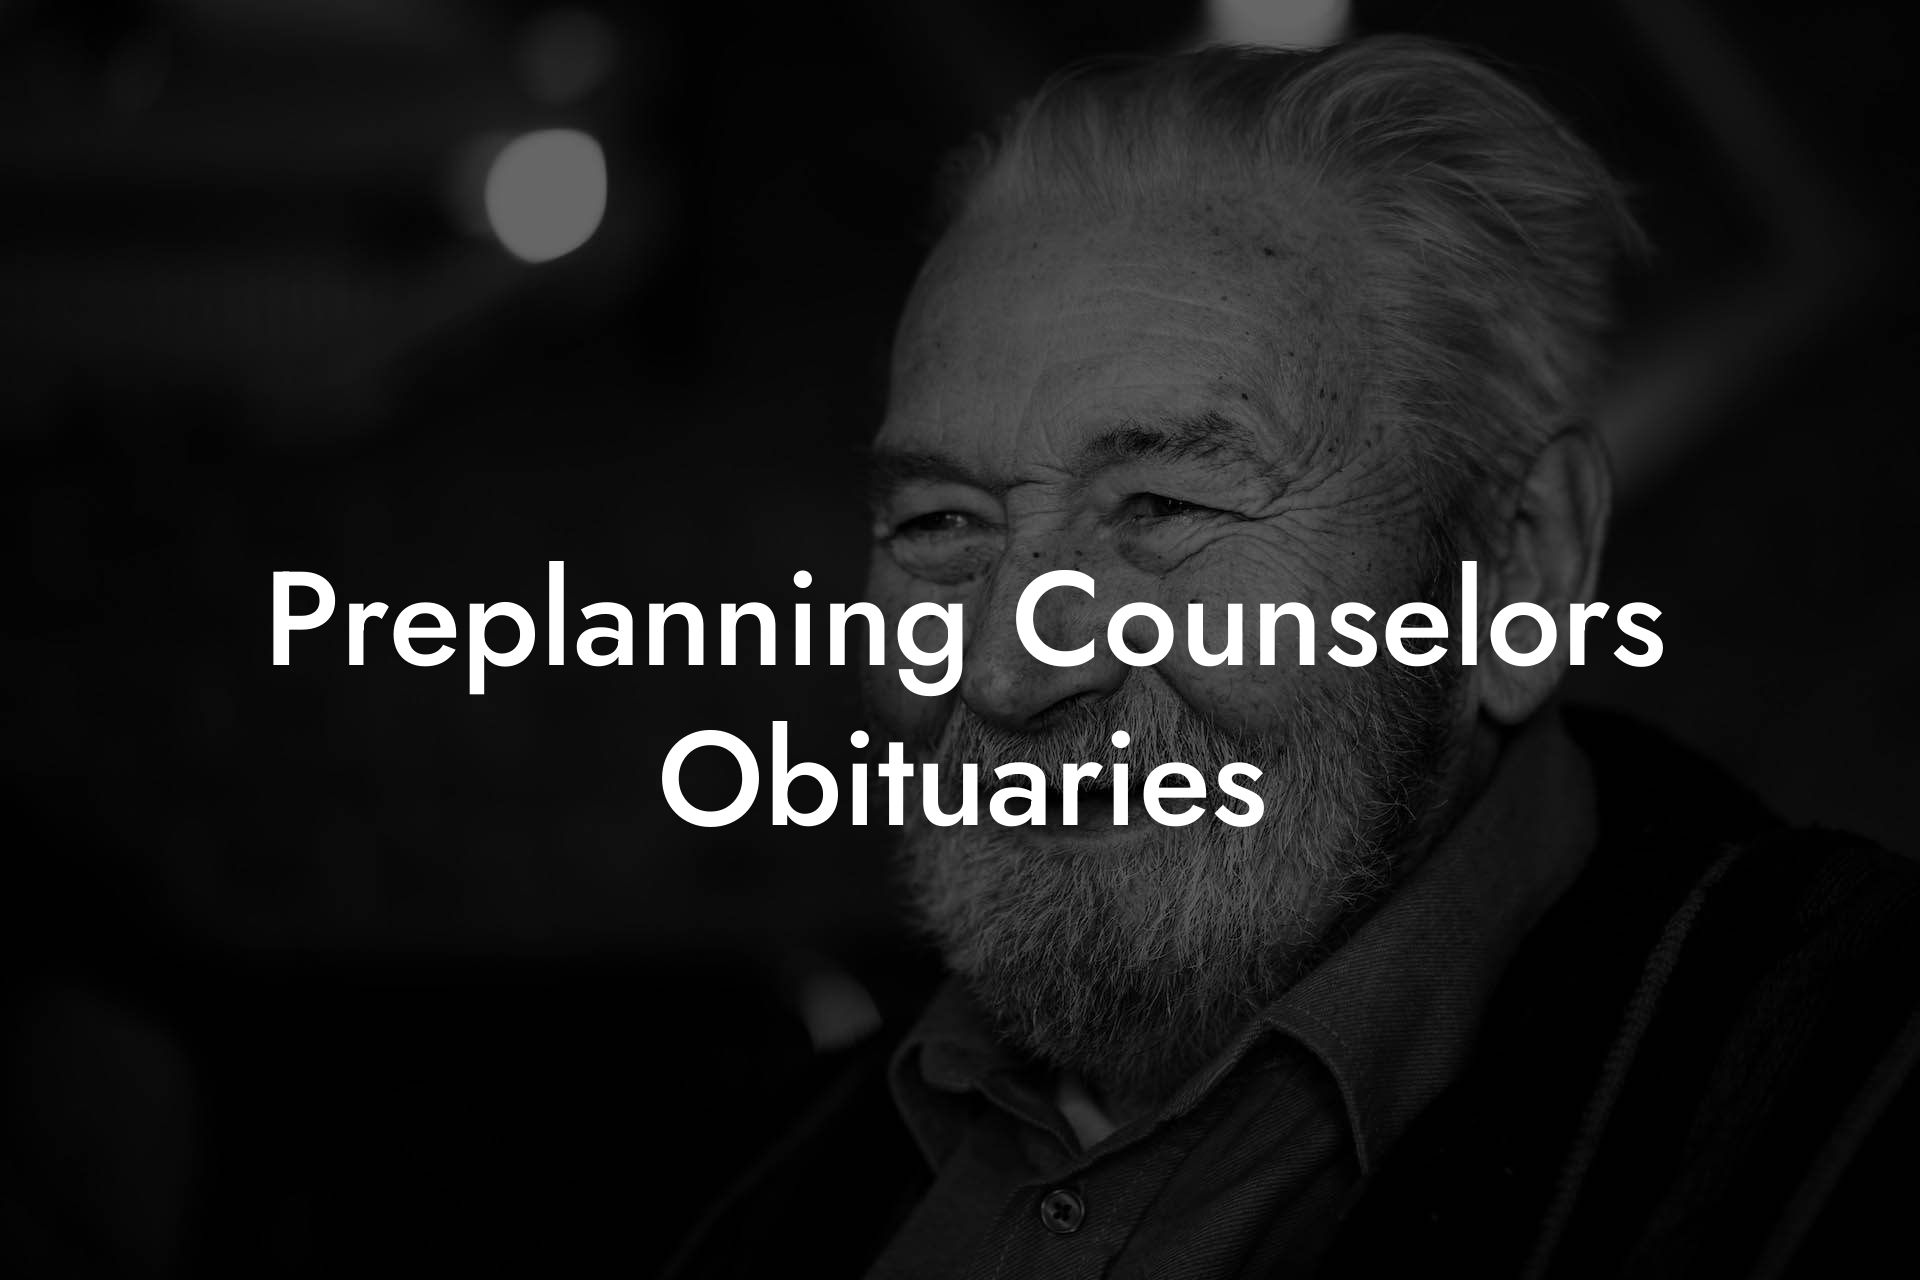 Preplanning Counselors Obituaries